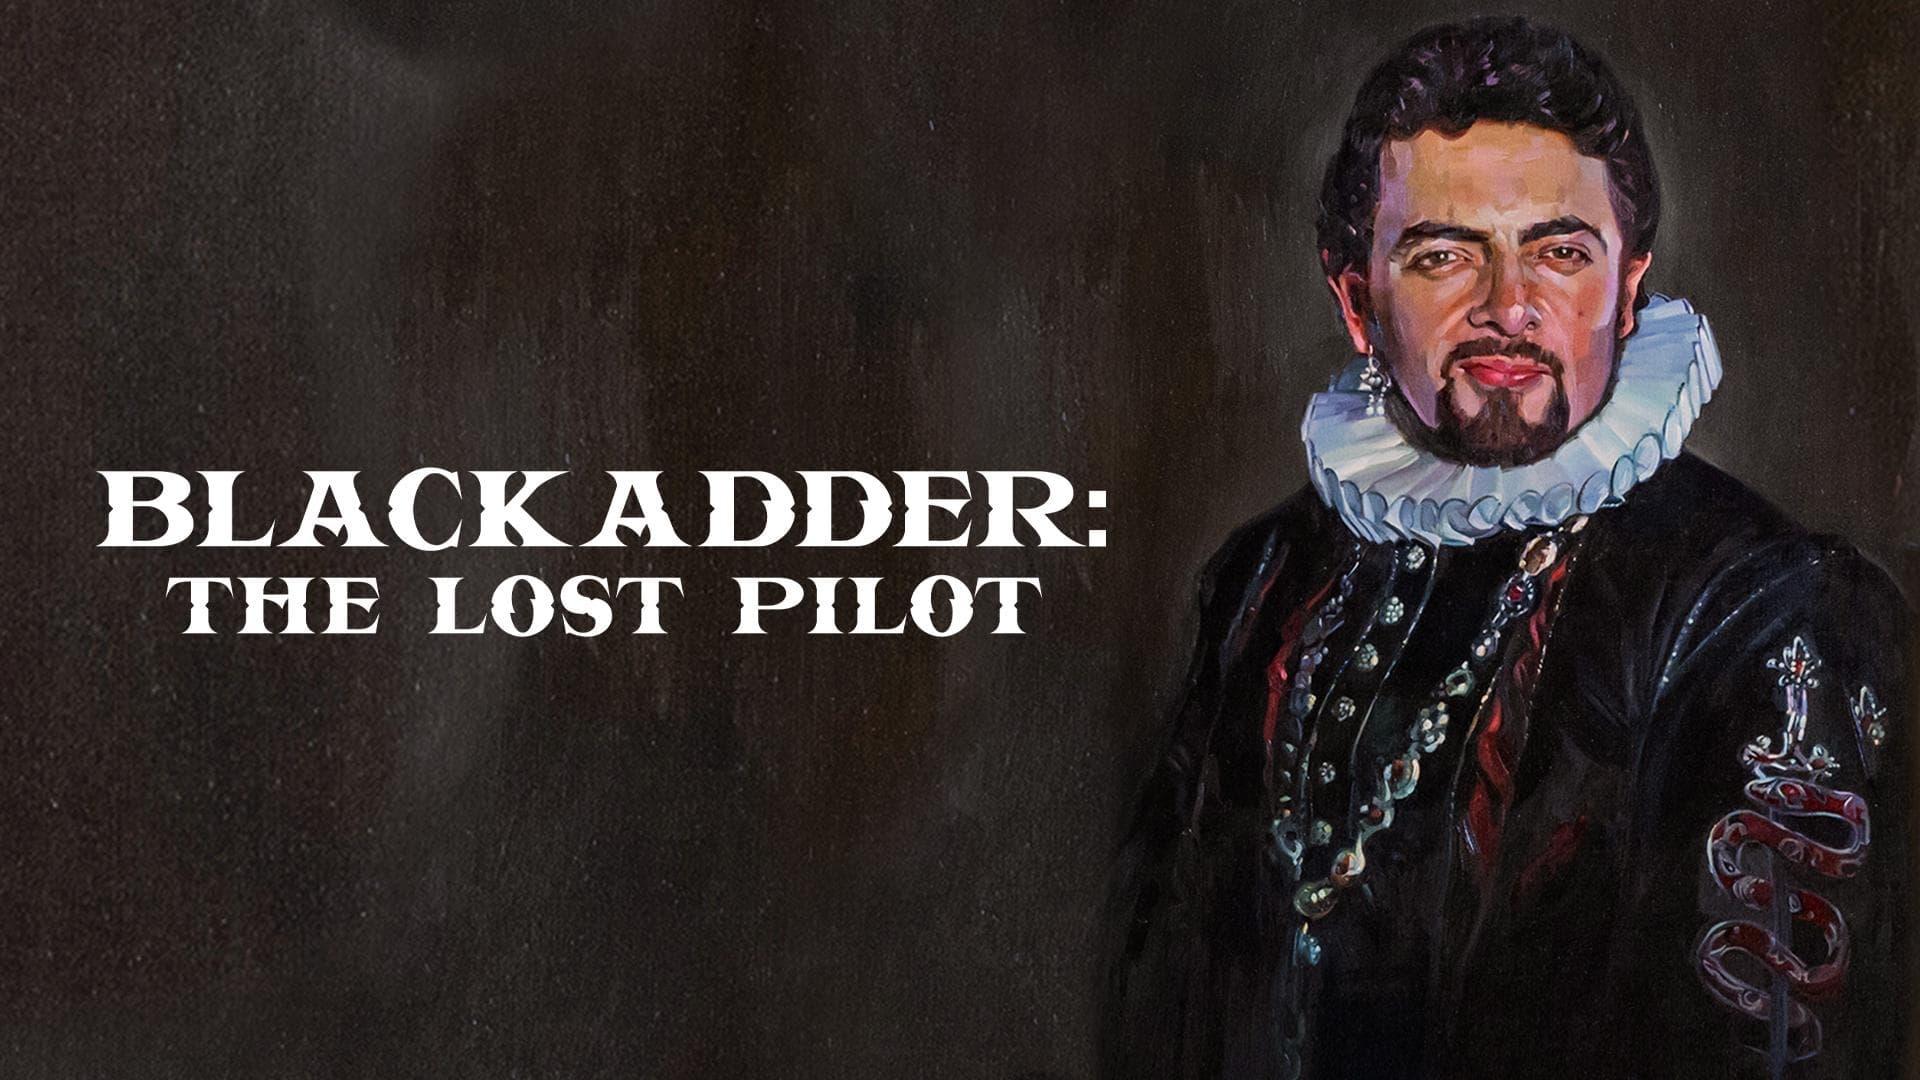 Blackadder: The Lost Pilot backdrop